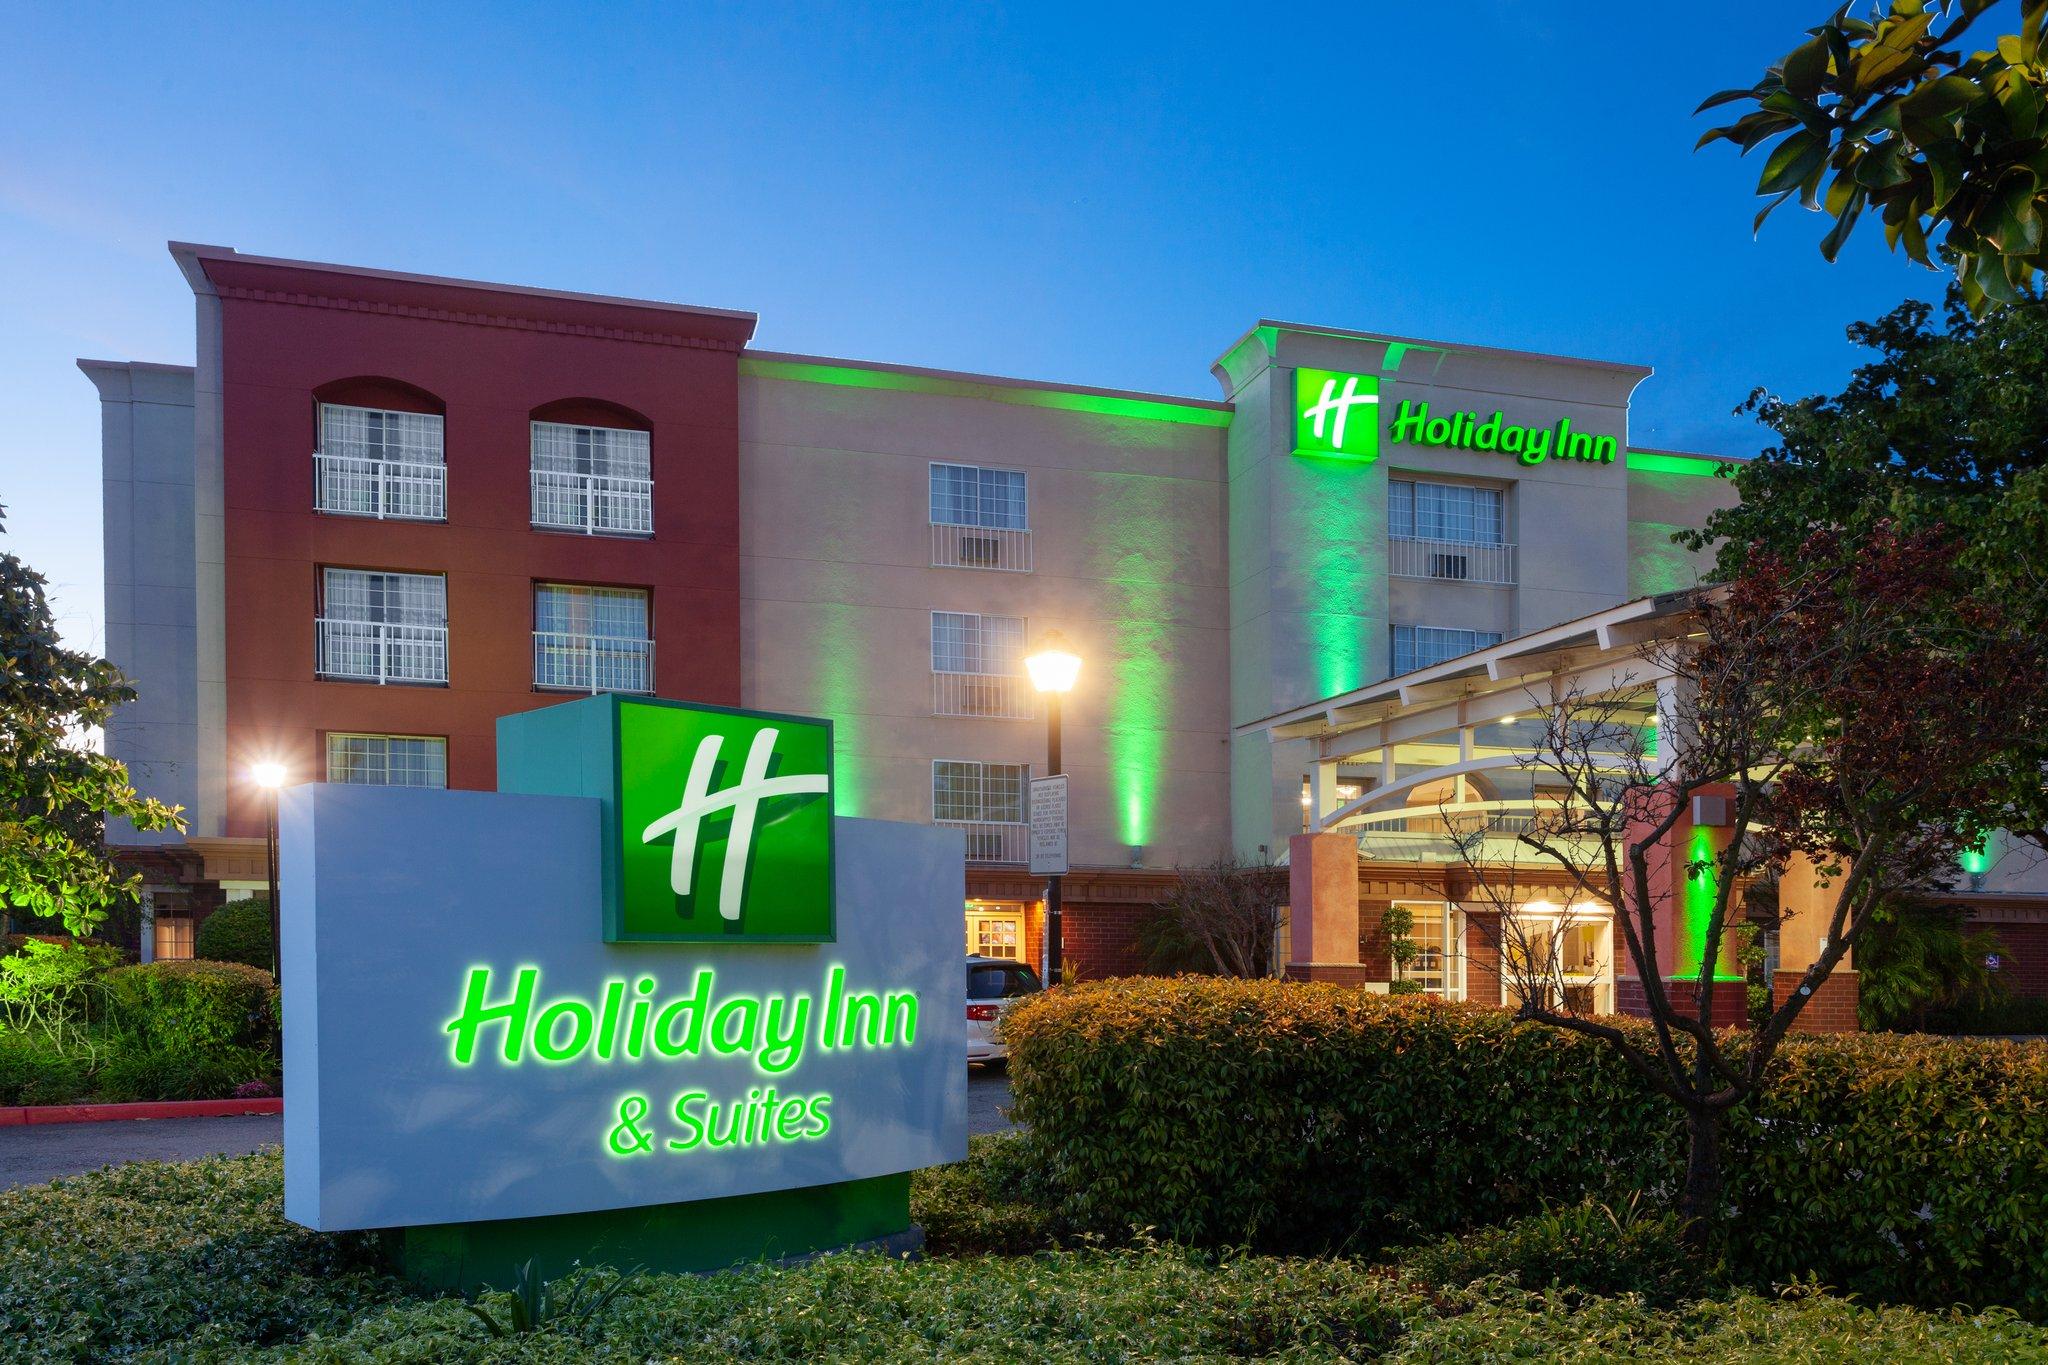 Holiday Inn Hotel & Suites San Mateo-San Francisco Sfo in San Mateo, CA